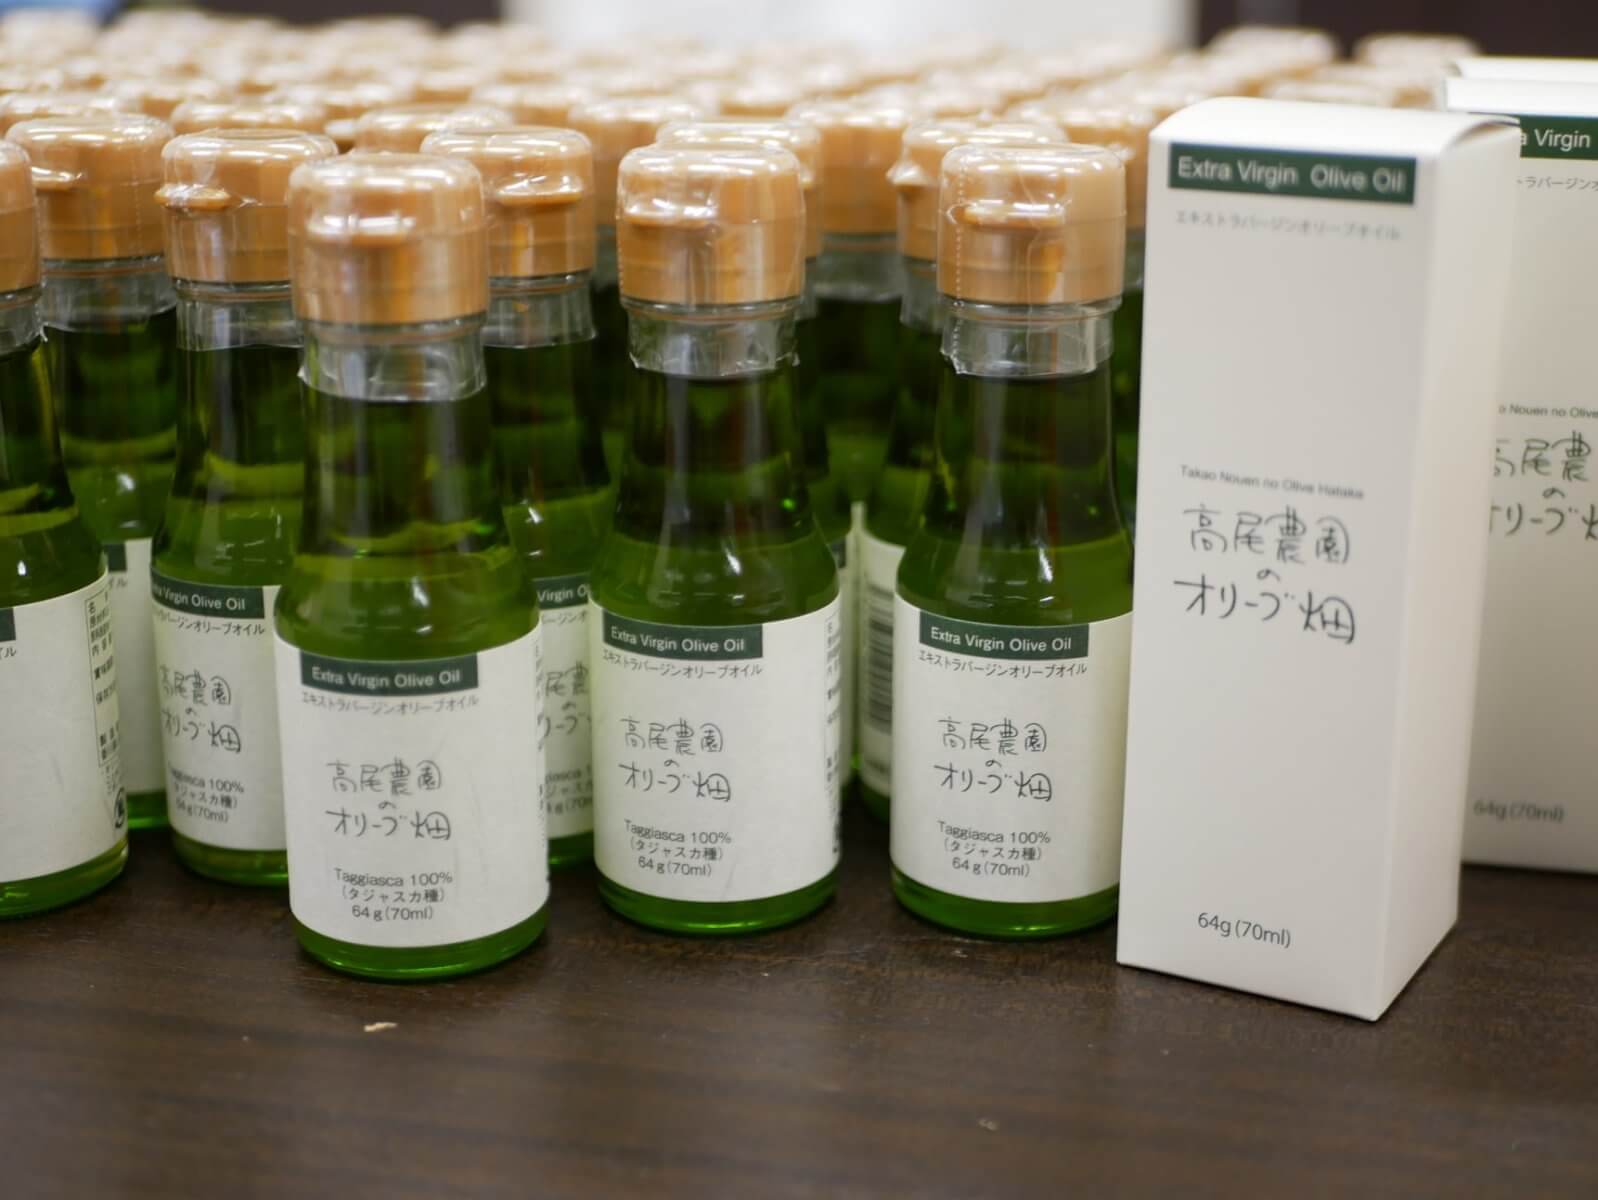 Takao Olive Oil